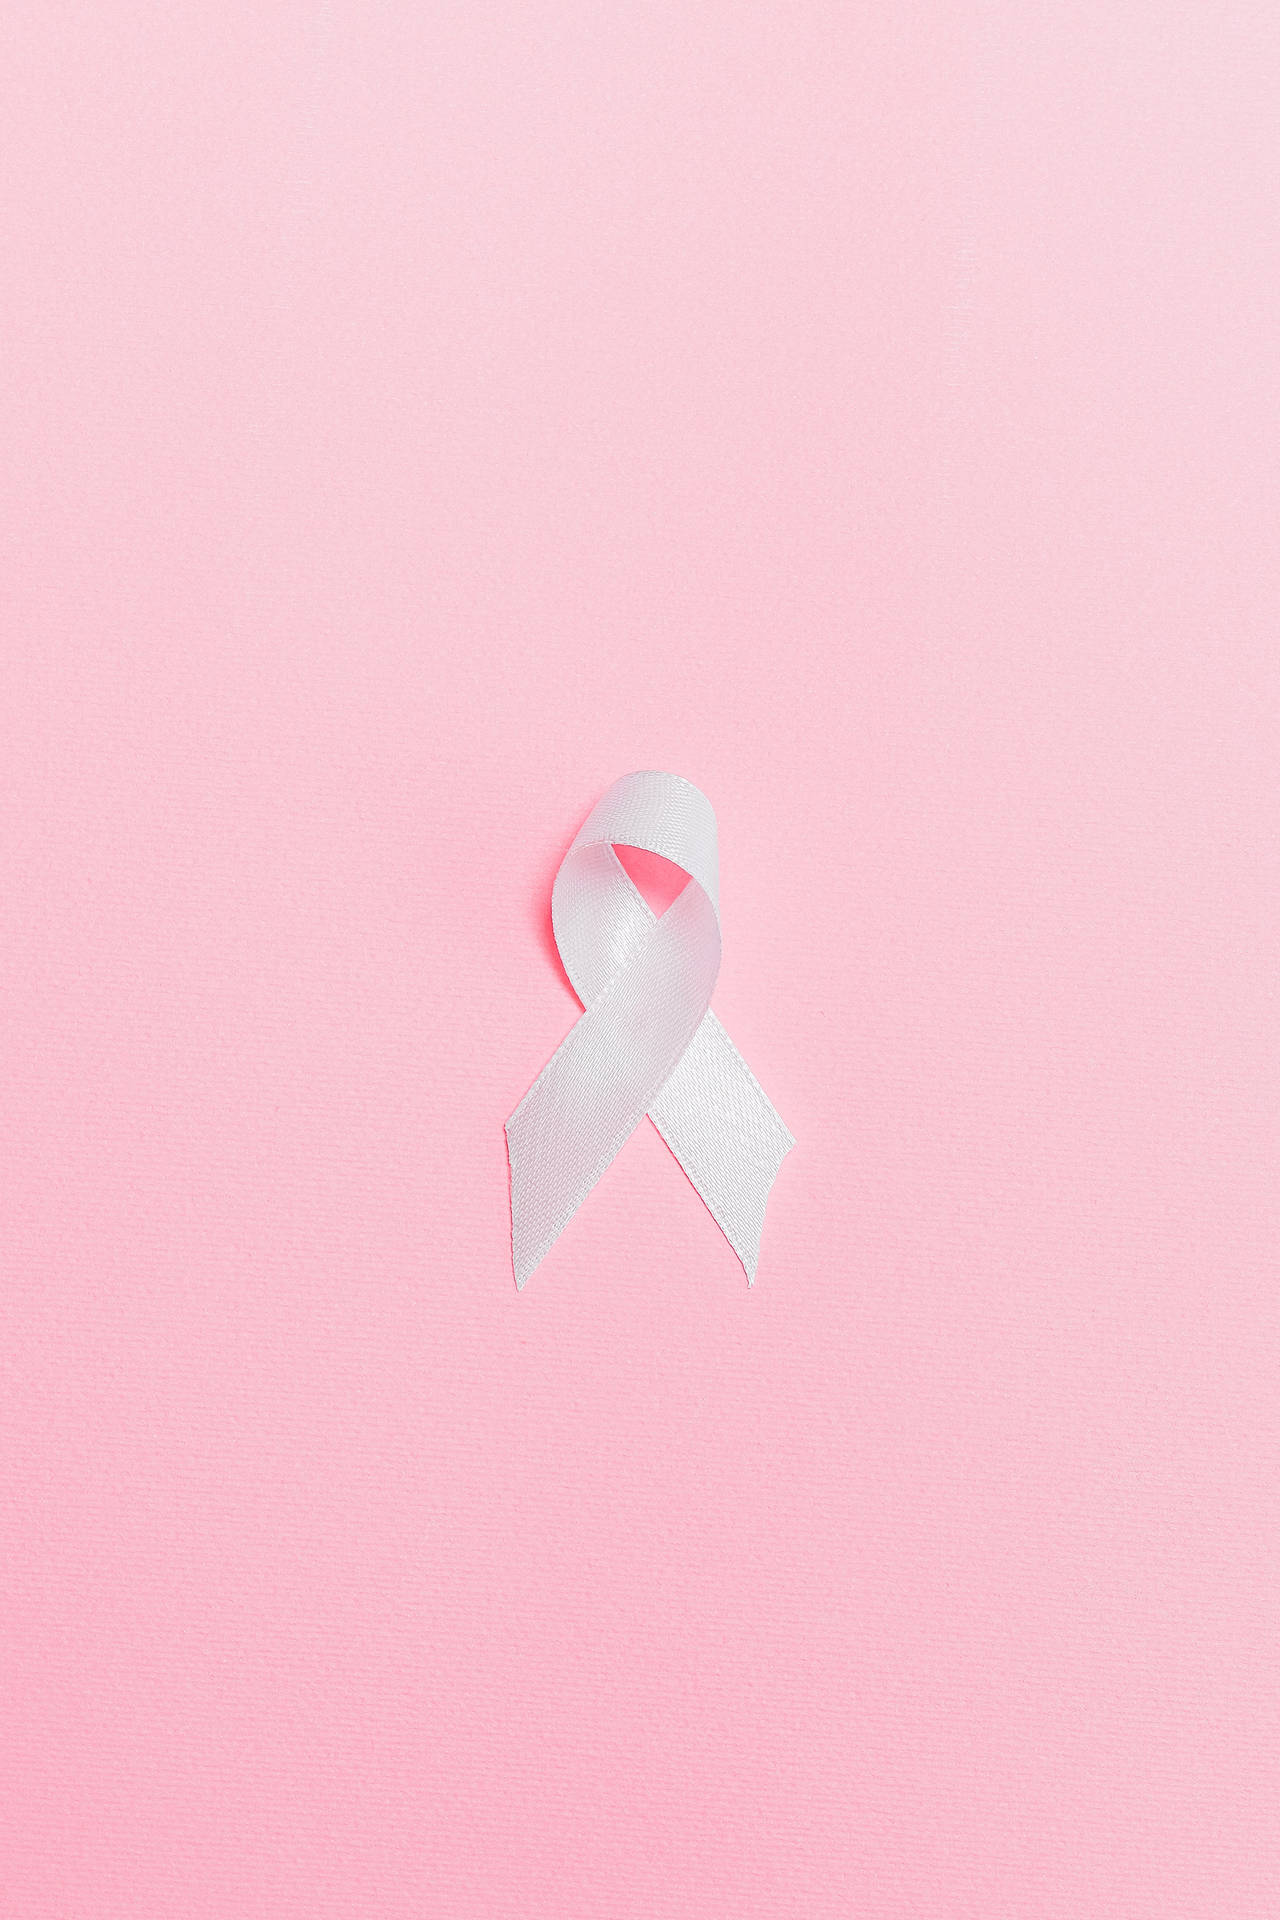 White Ribbon On Pink Background Background